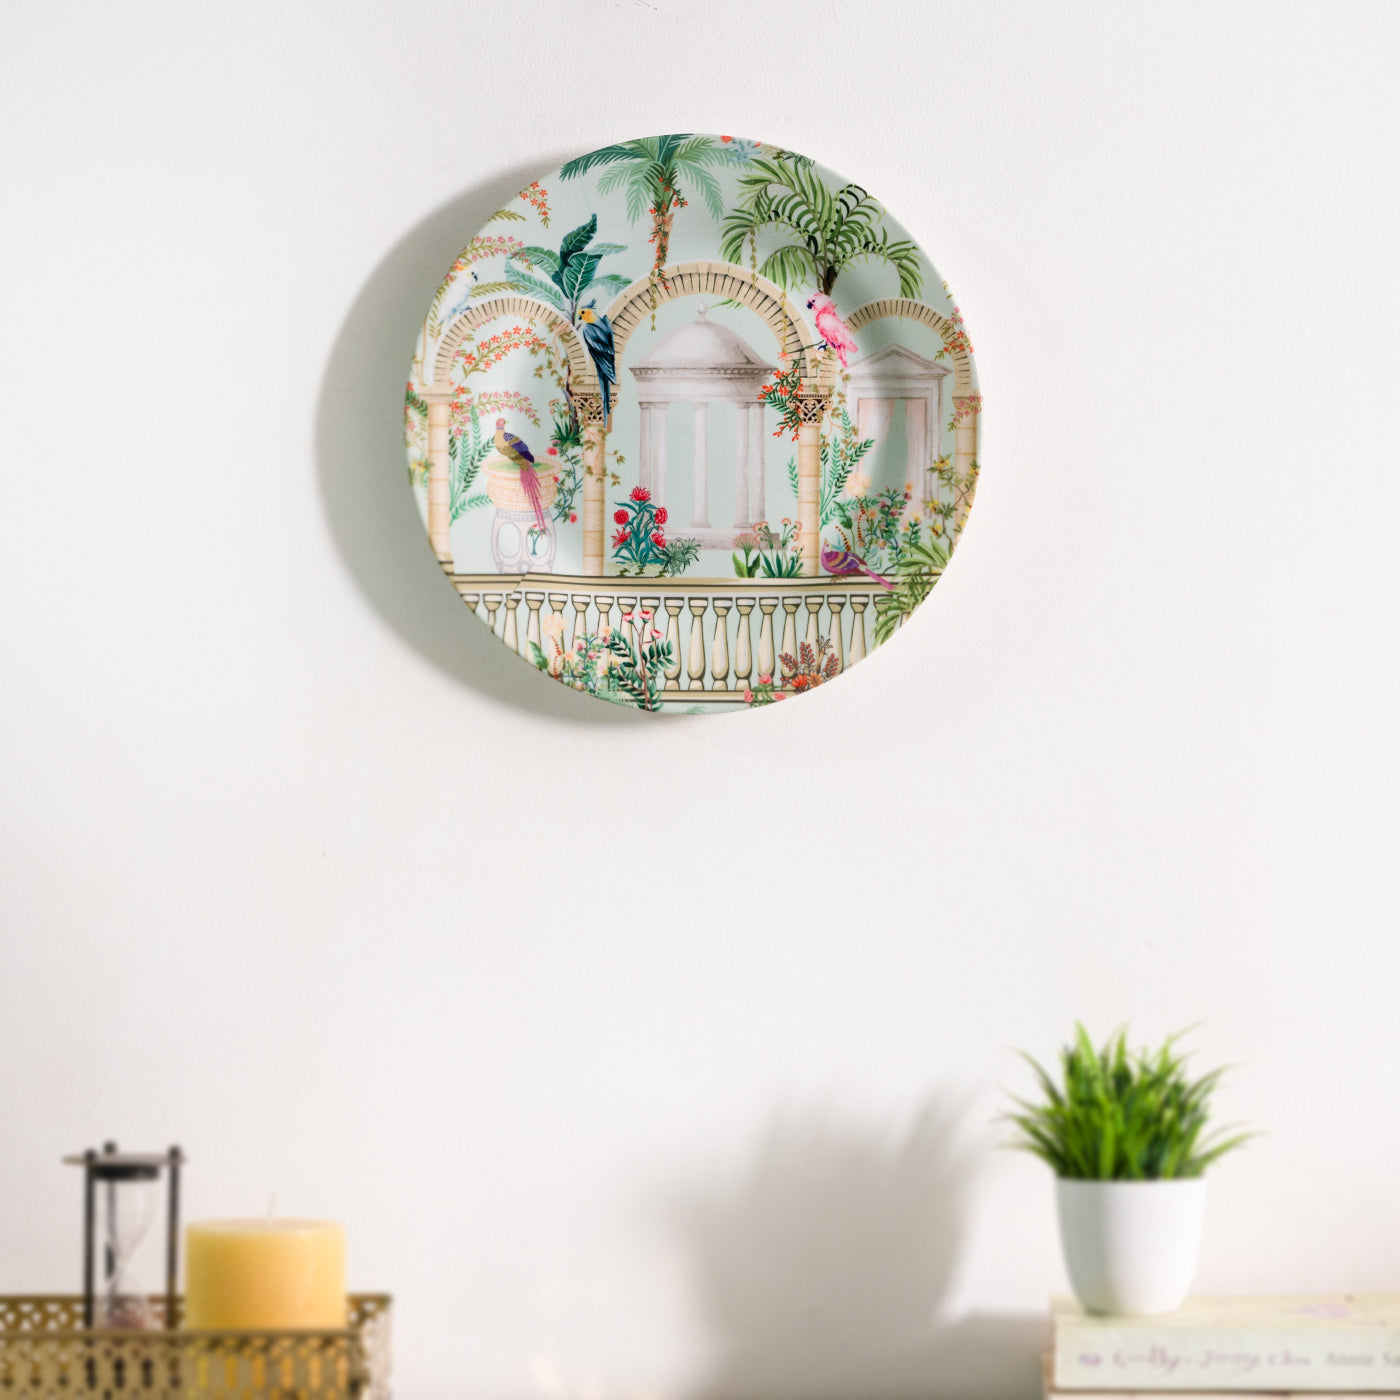 Renaissance Ceramic wall plates decor hanging / tabletop